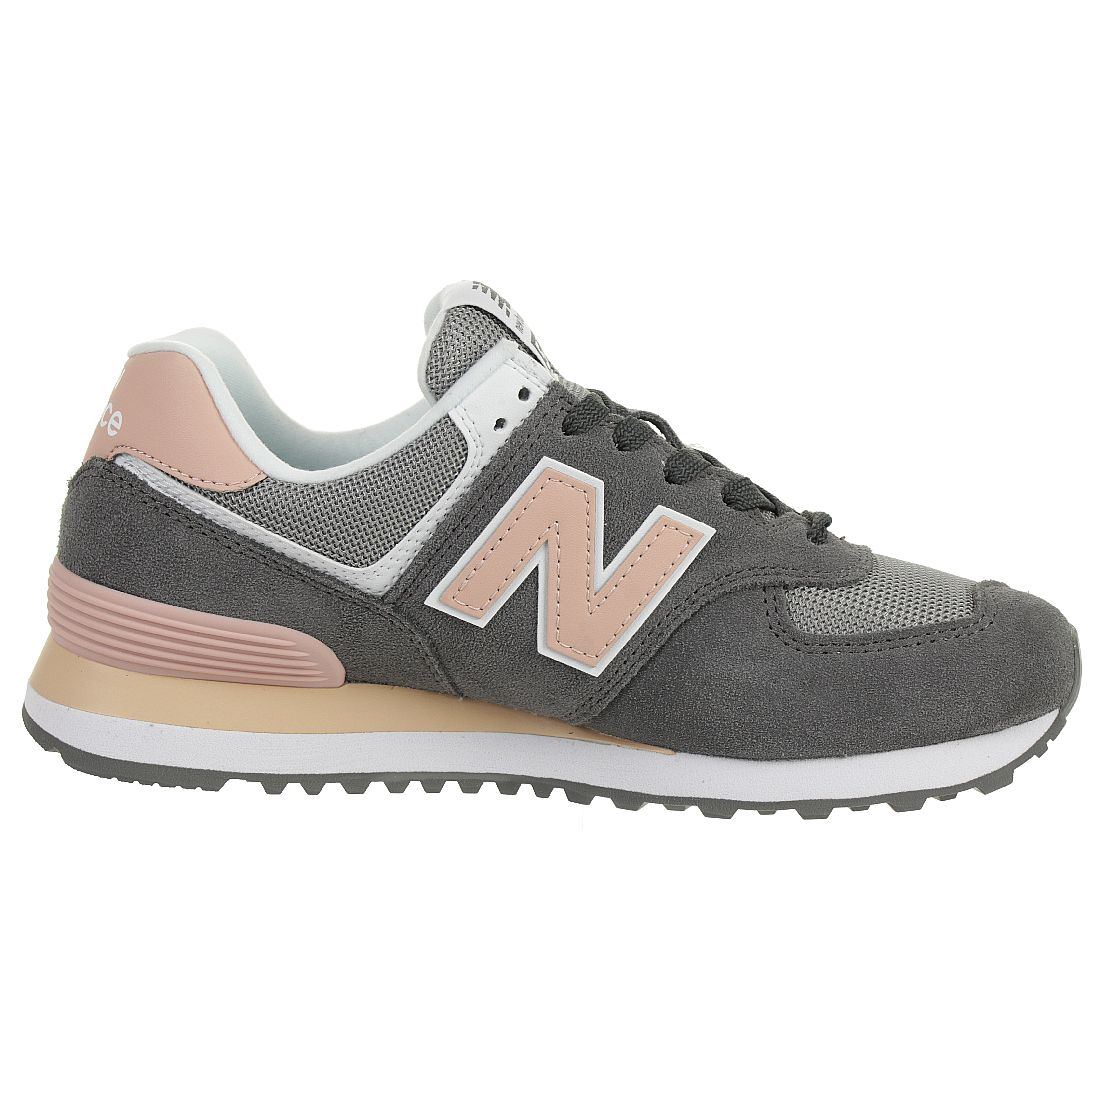 New Balance WL574 NDB Classic Sneaker Damen Schuhe grau